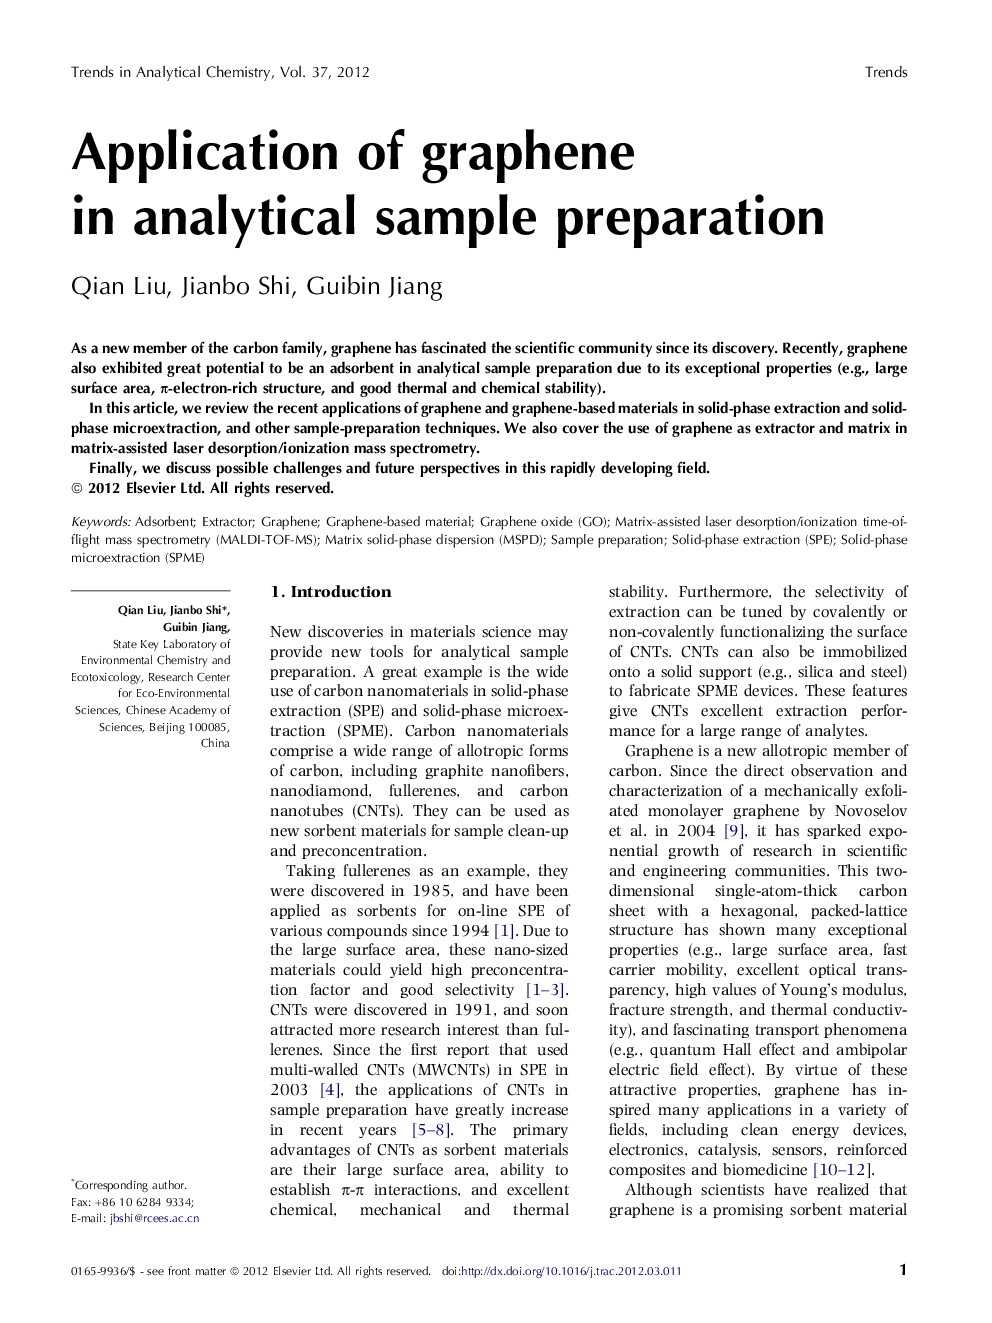 Application of graphene in analytical sample preparation